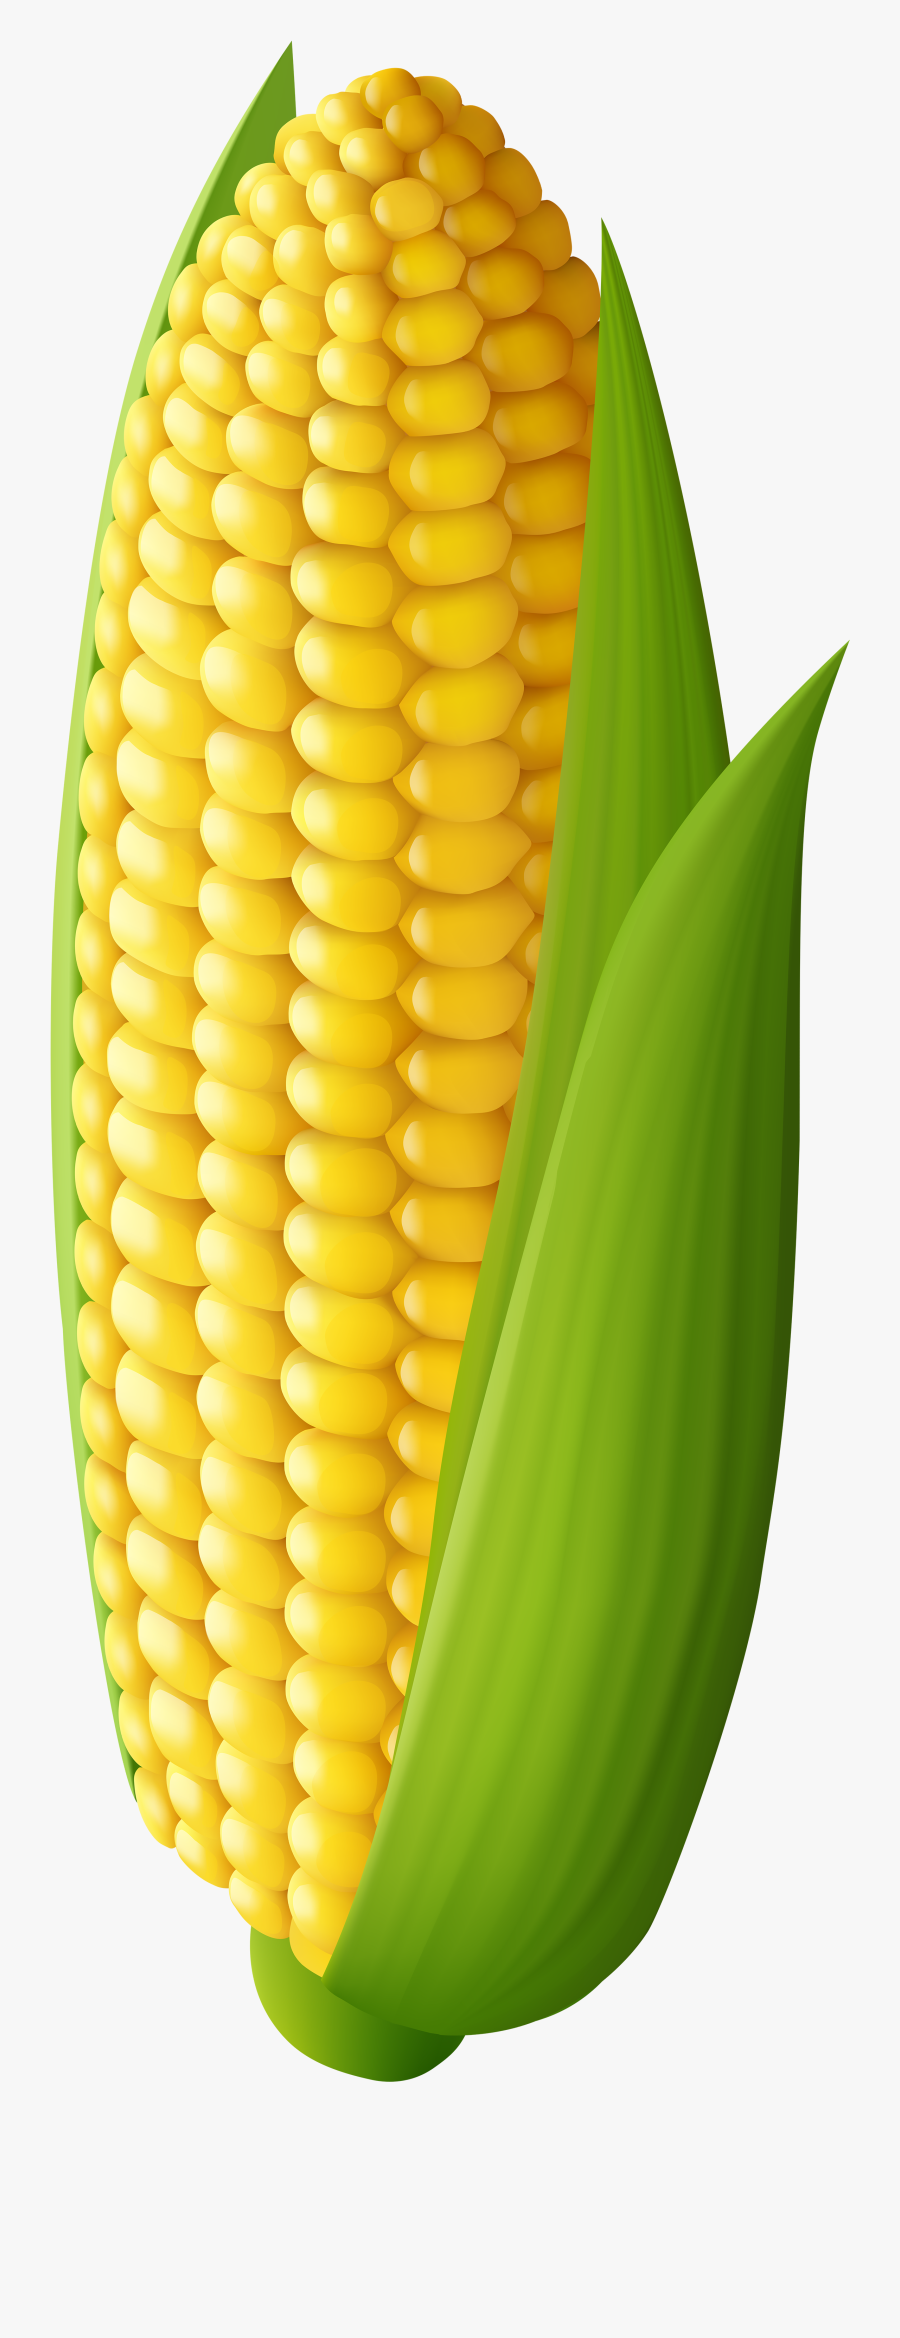 Corn Clip Art 2 Clipartbarn - Clipart Corn On The Cob, Transparent Clipart